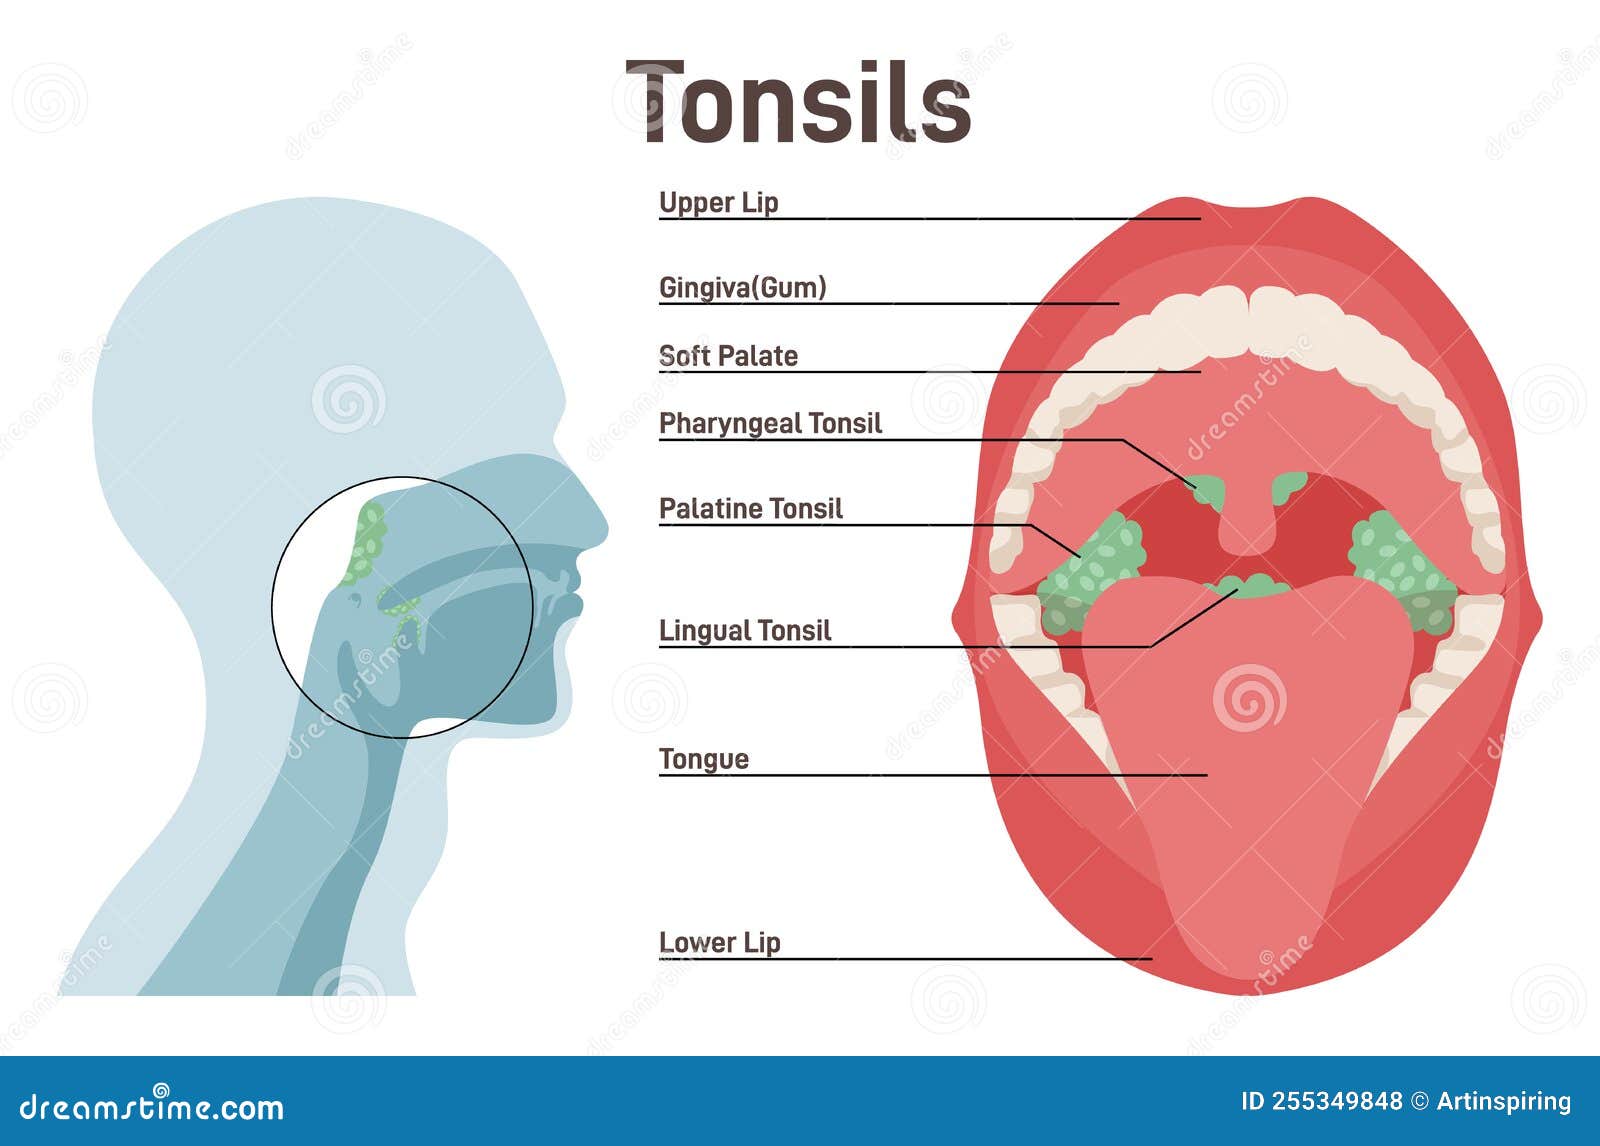 Tonsils Human Lymphoid Organs Stock Vector Illustration Of Medical